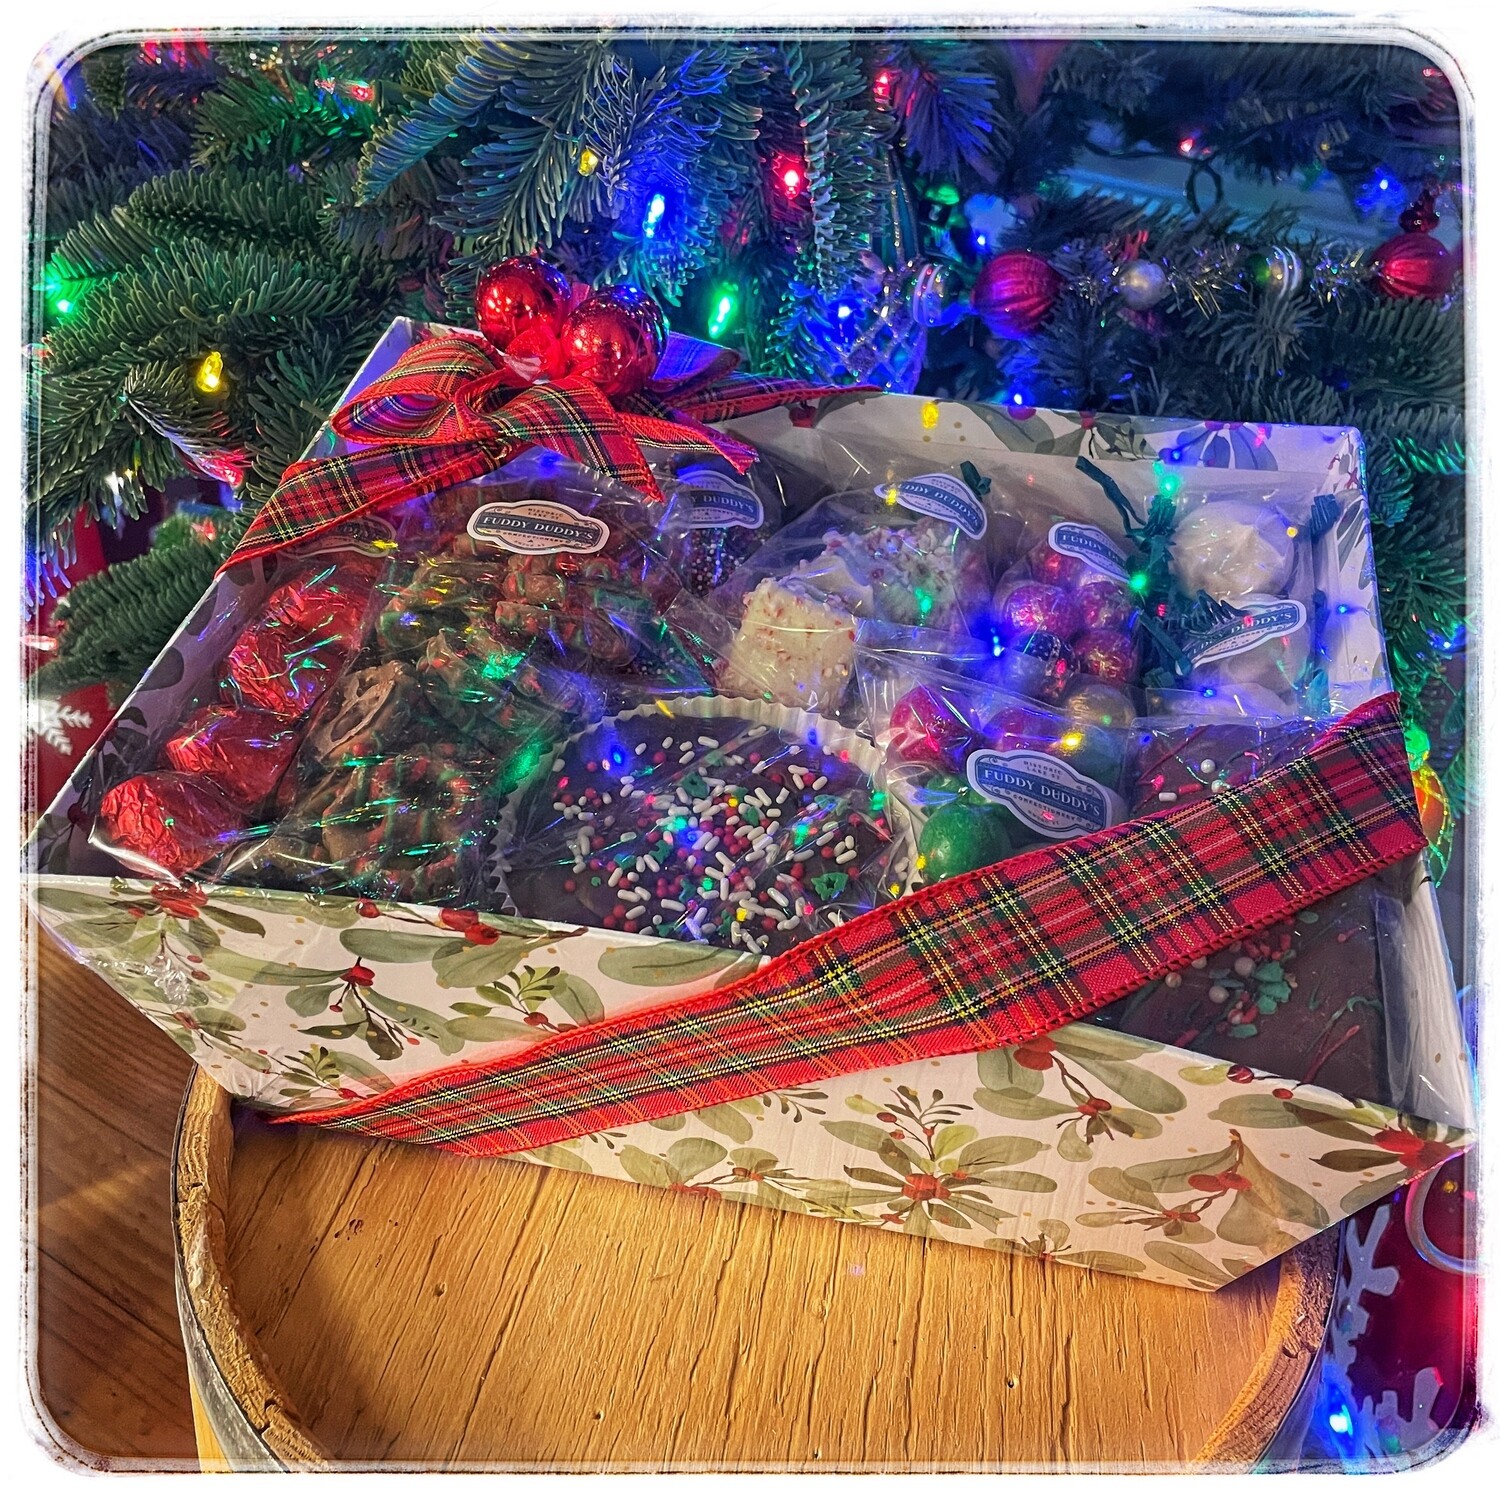 Fuddy Duddy's Chocolate Lovers Holiday Gift Box - Large